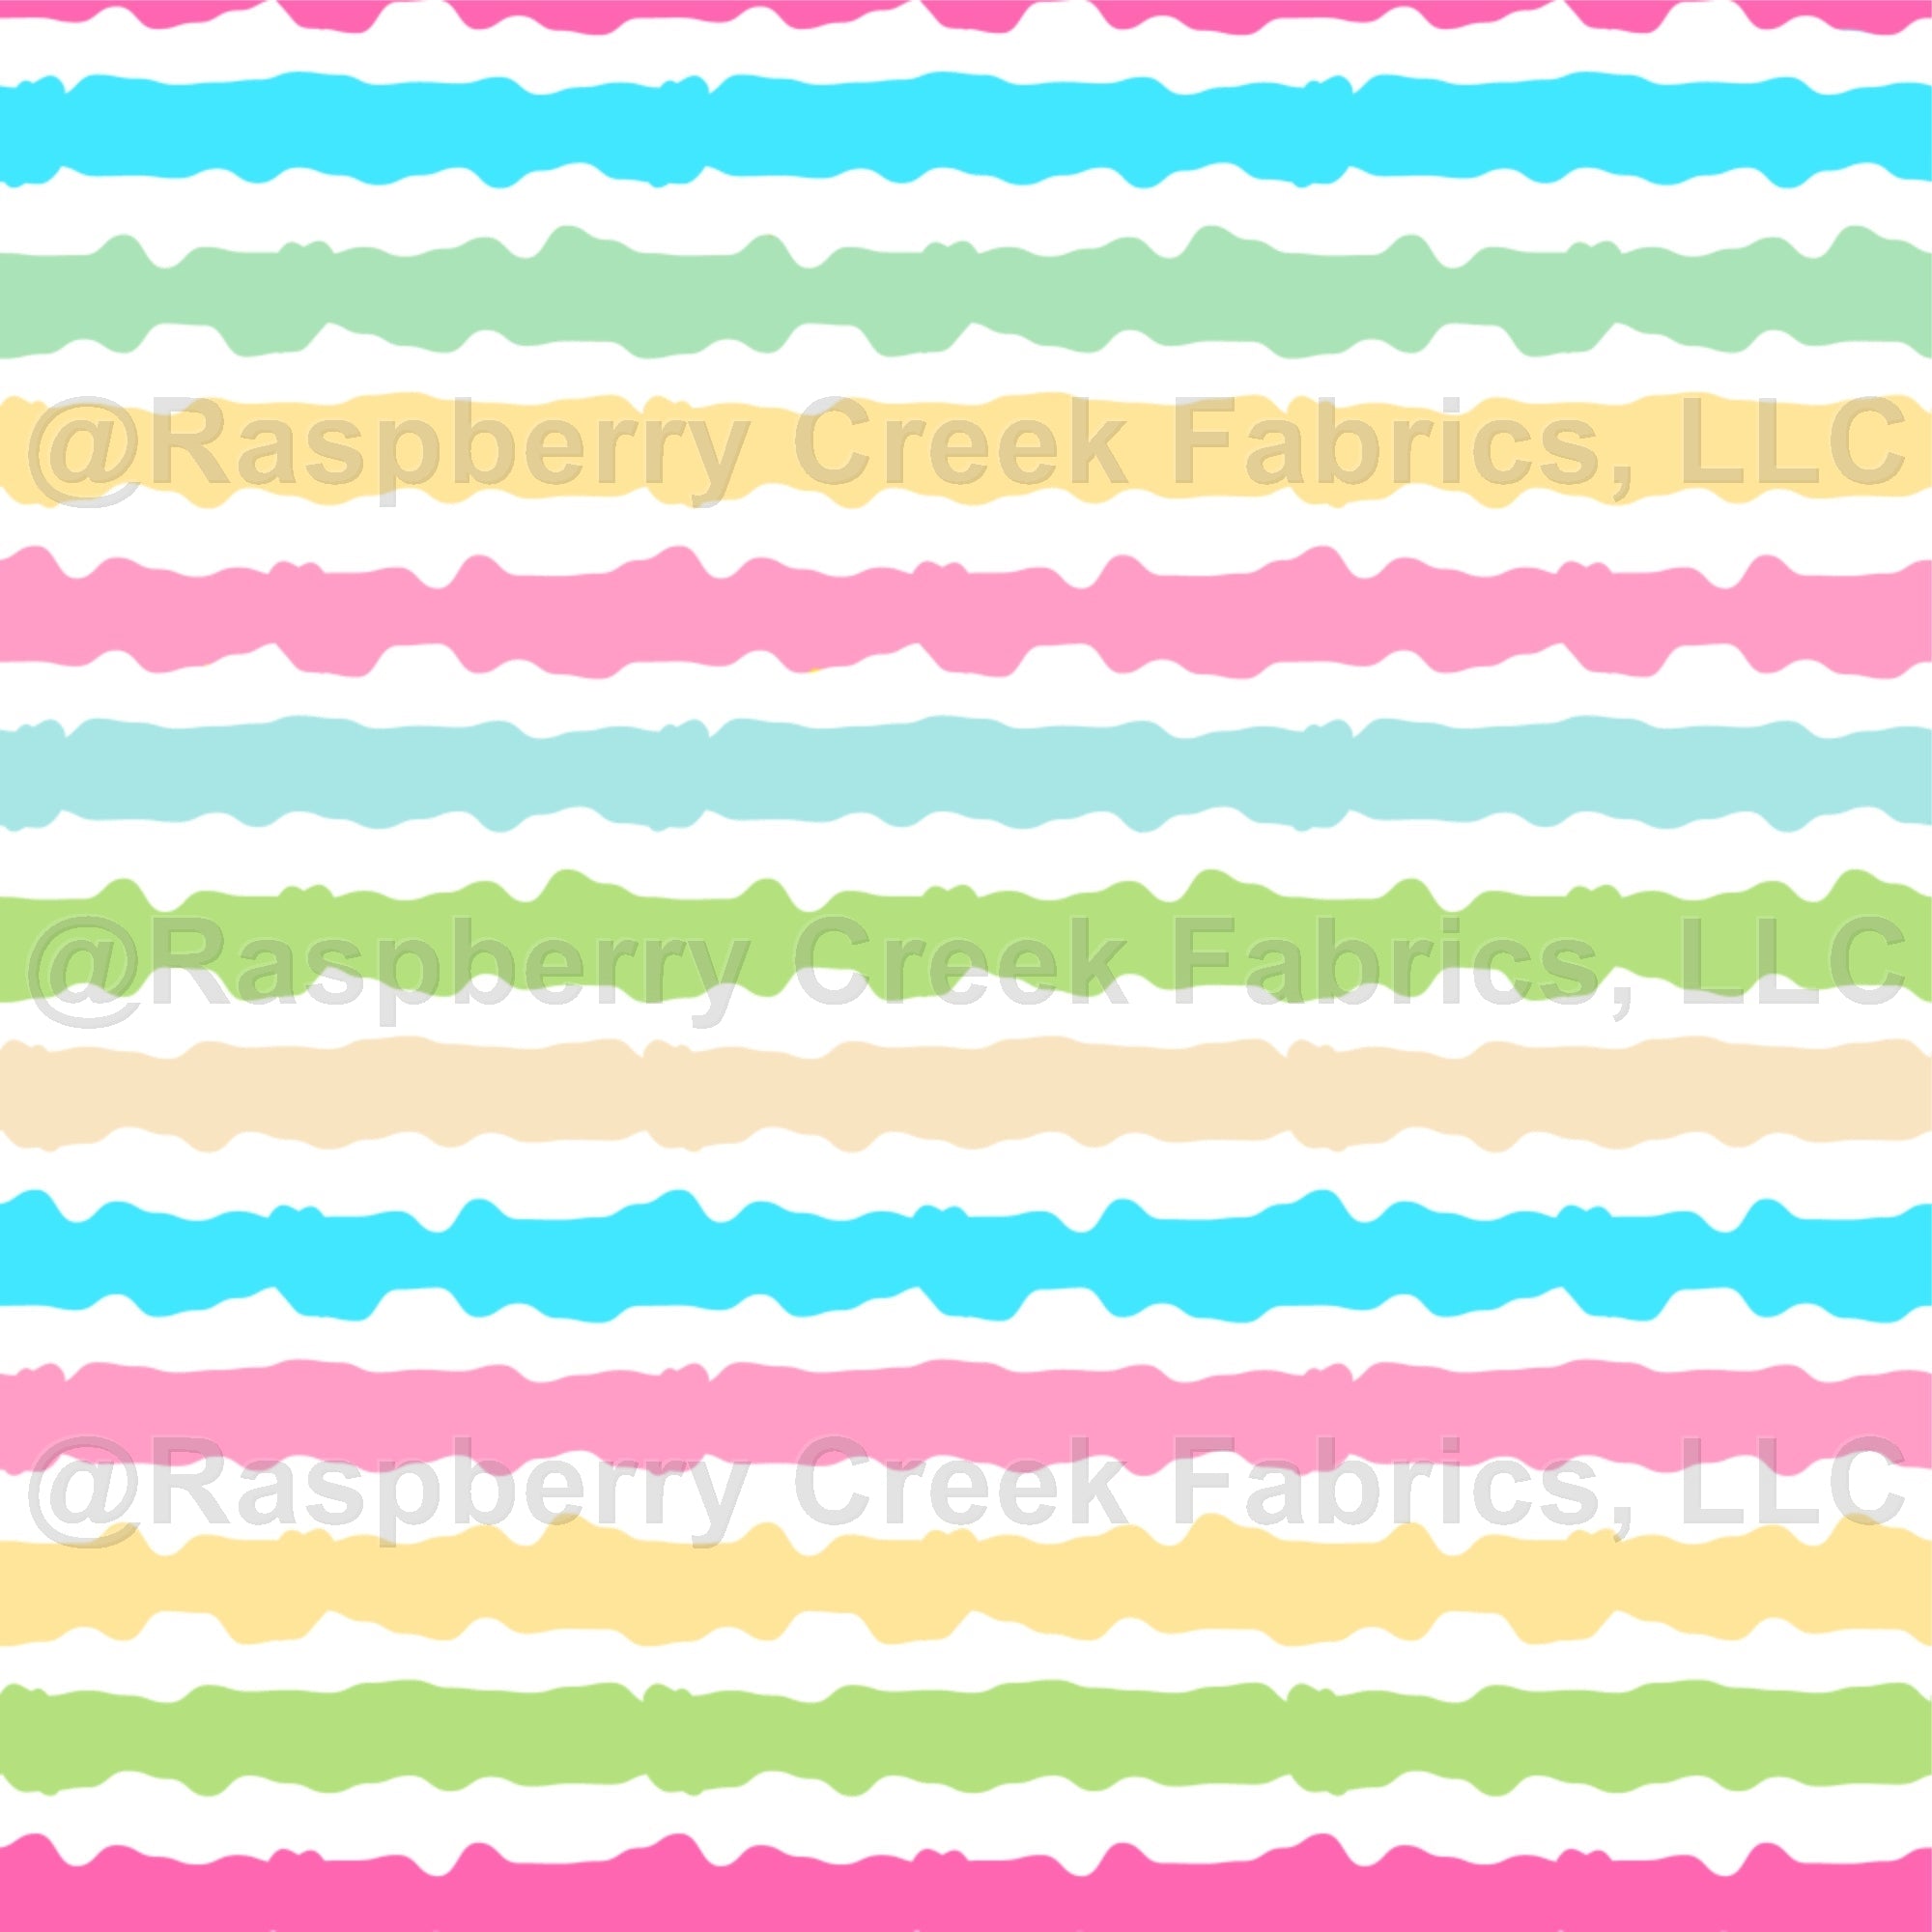 Pastel Stripes Easter Peeps Coordinate Fabric, Raspberry Creek Fabrics, watermarked